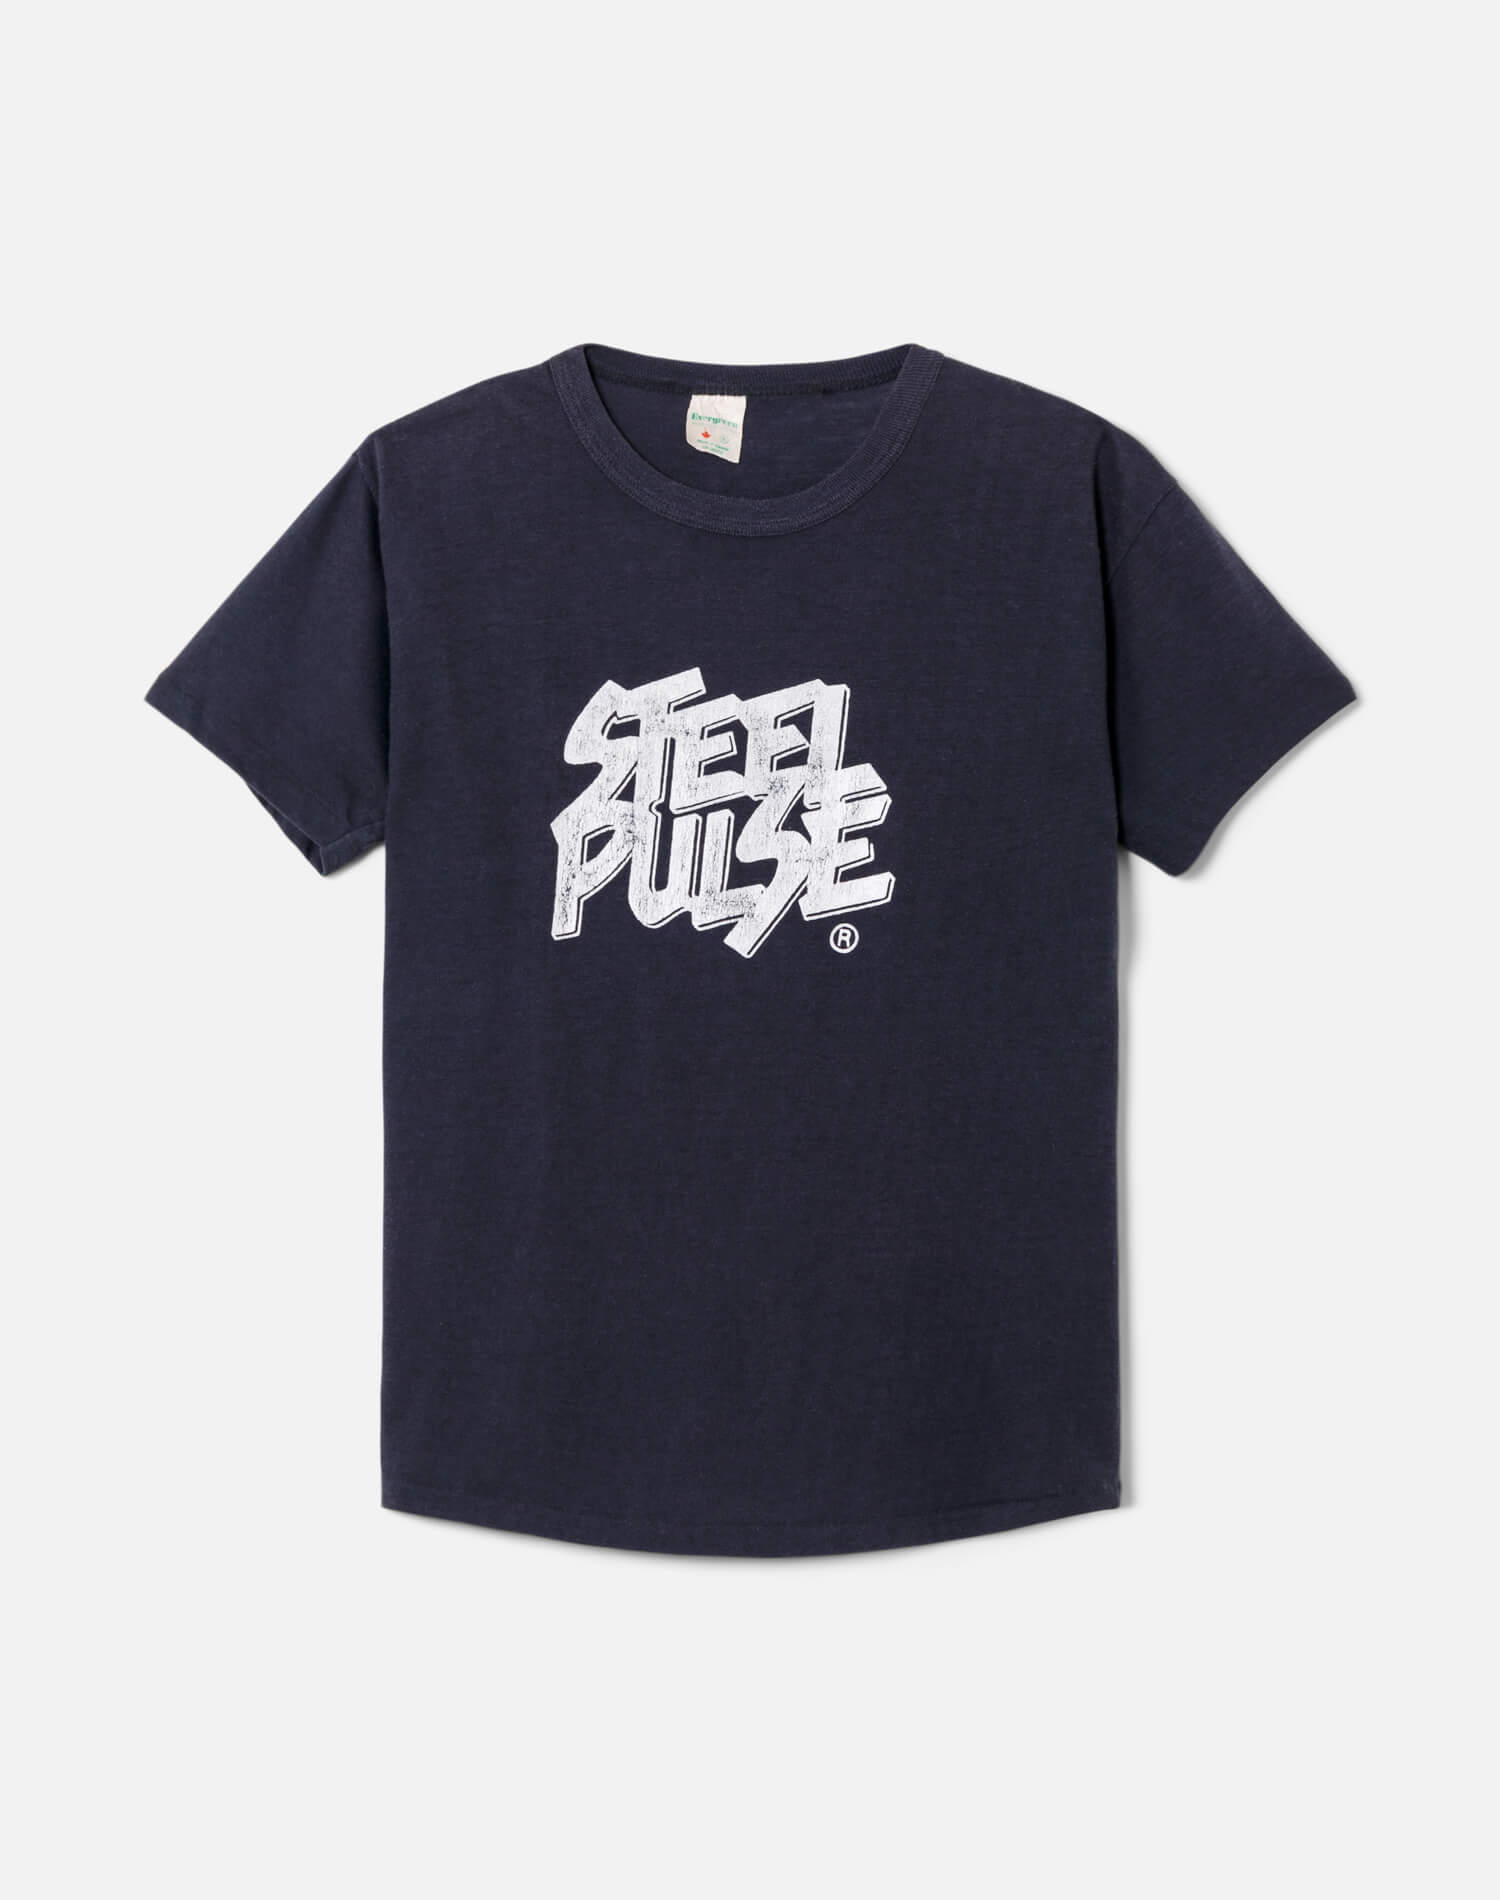 1989 Steel Pulse Serious Business Tee